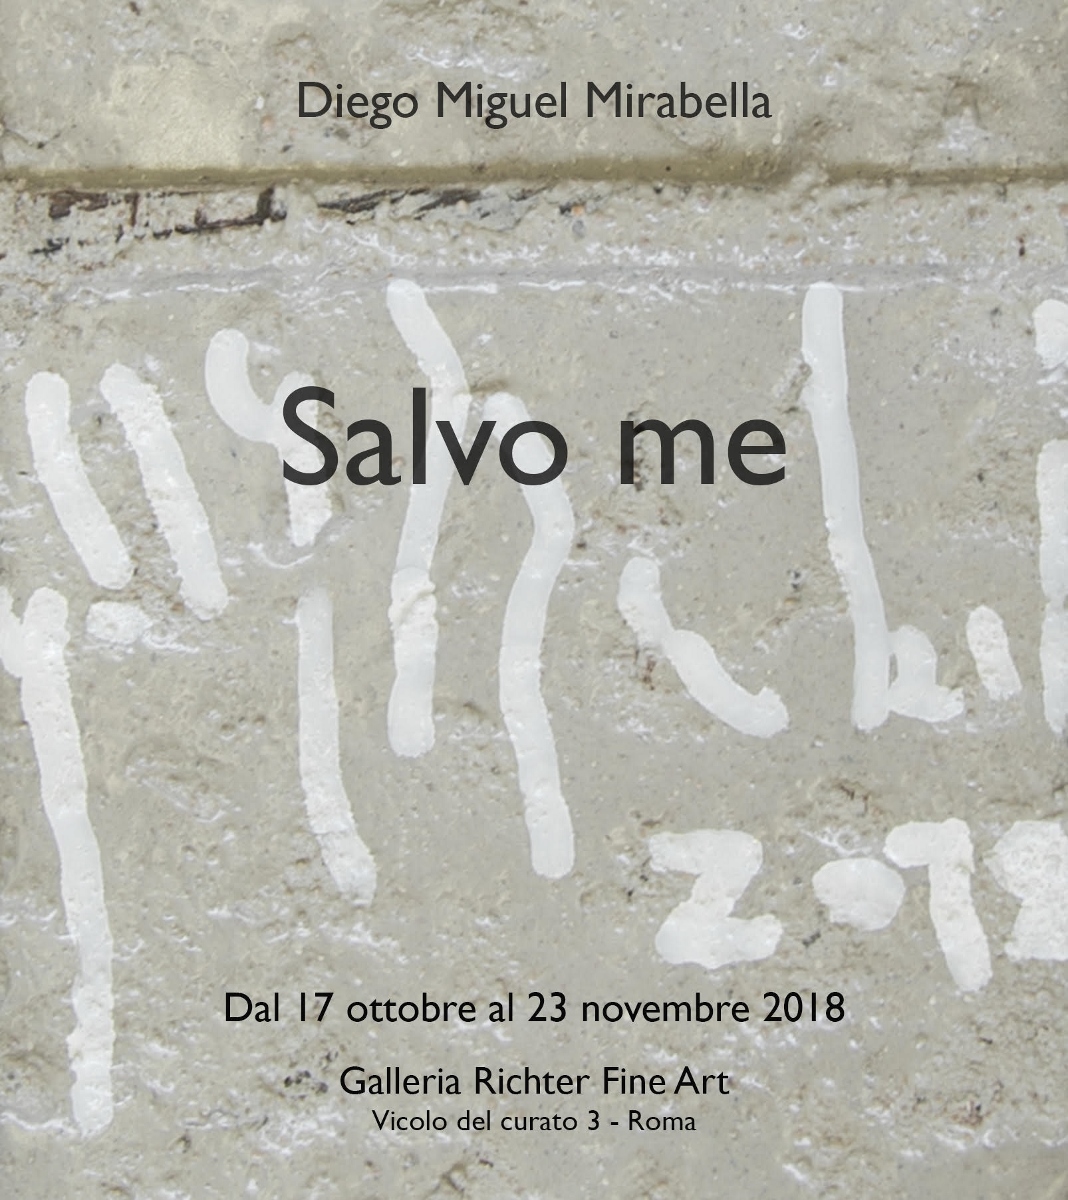 Diego Miguel Mirabella - Salvo me